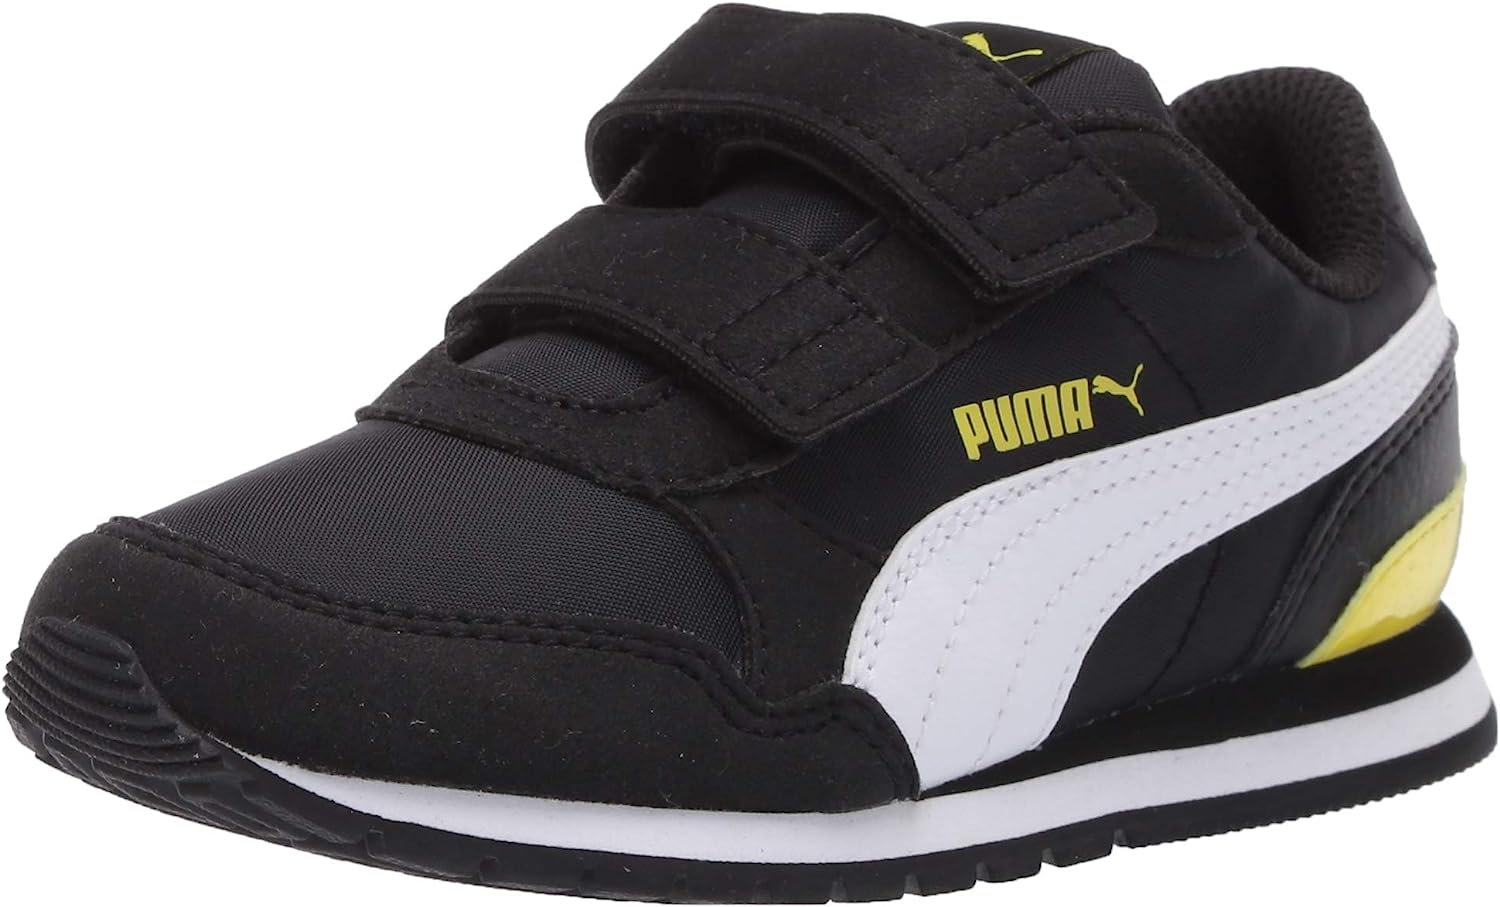 PUMA Unisex-Child ST Runner Hook and Loop Sneaker